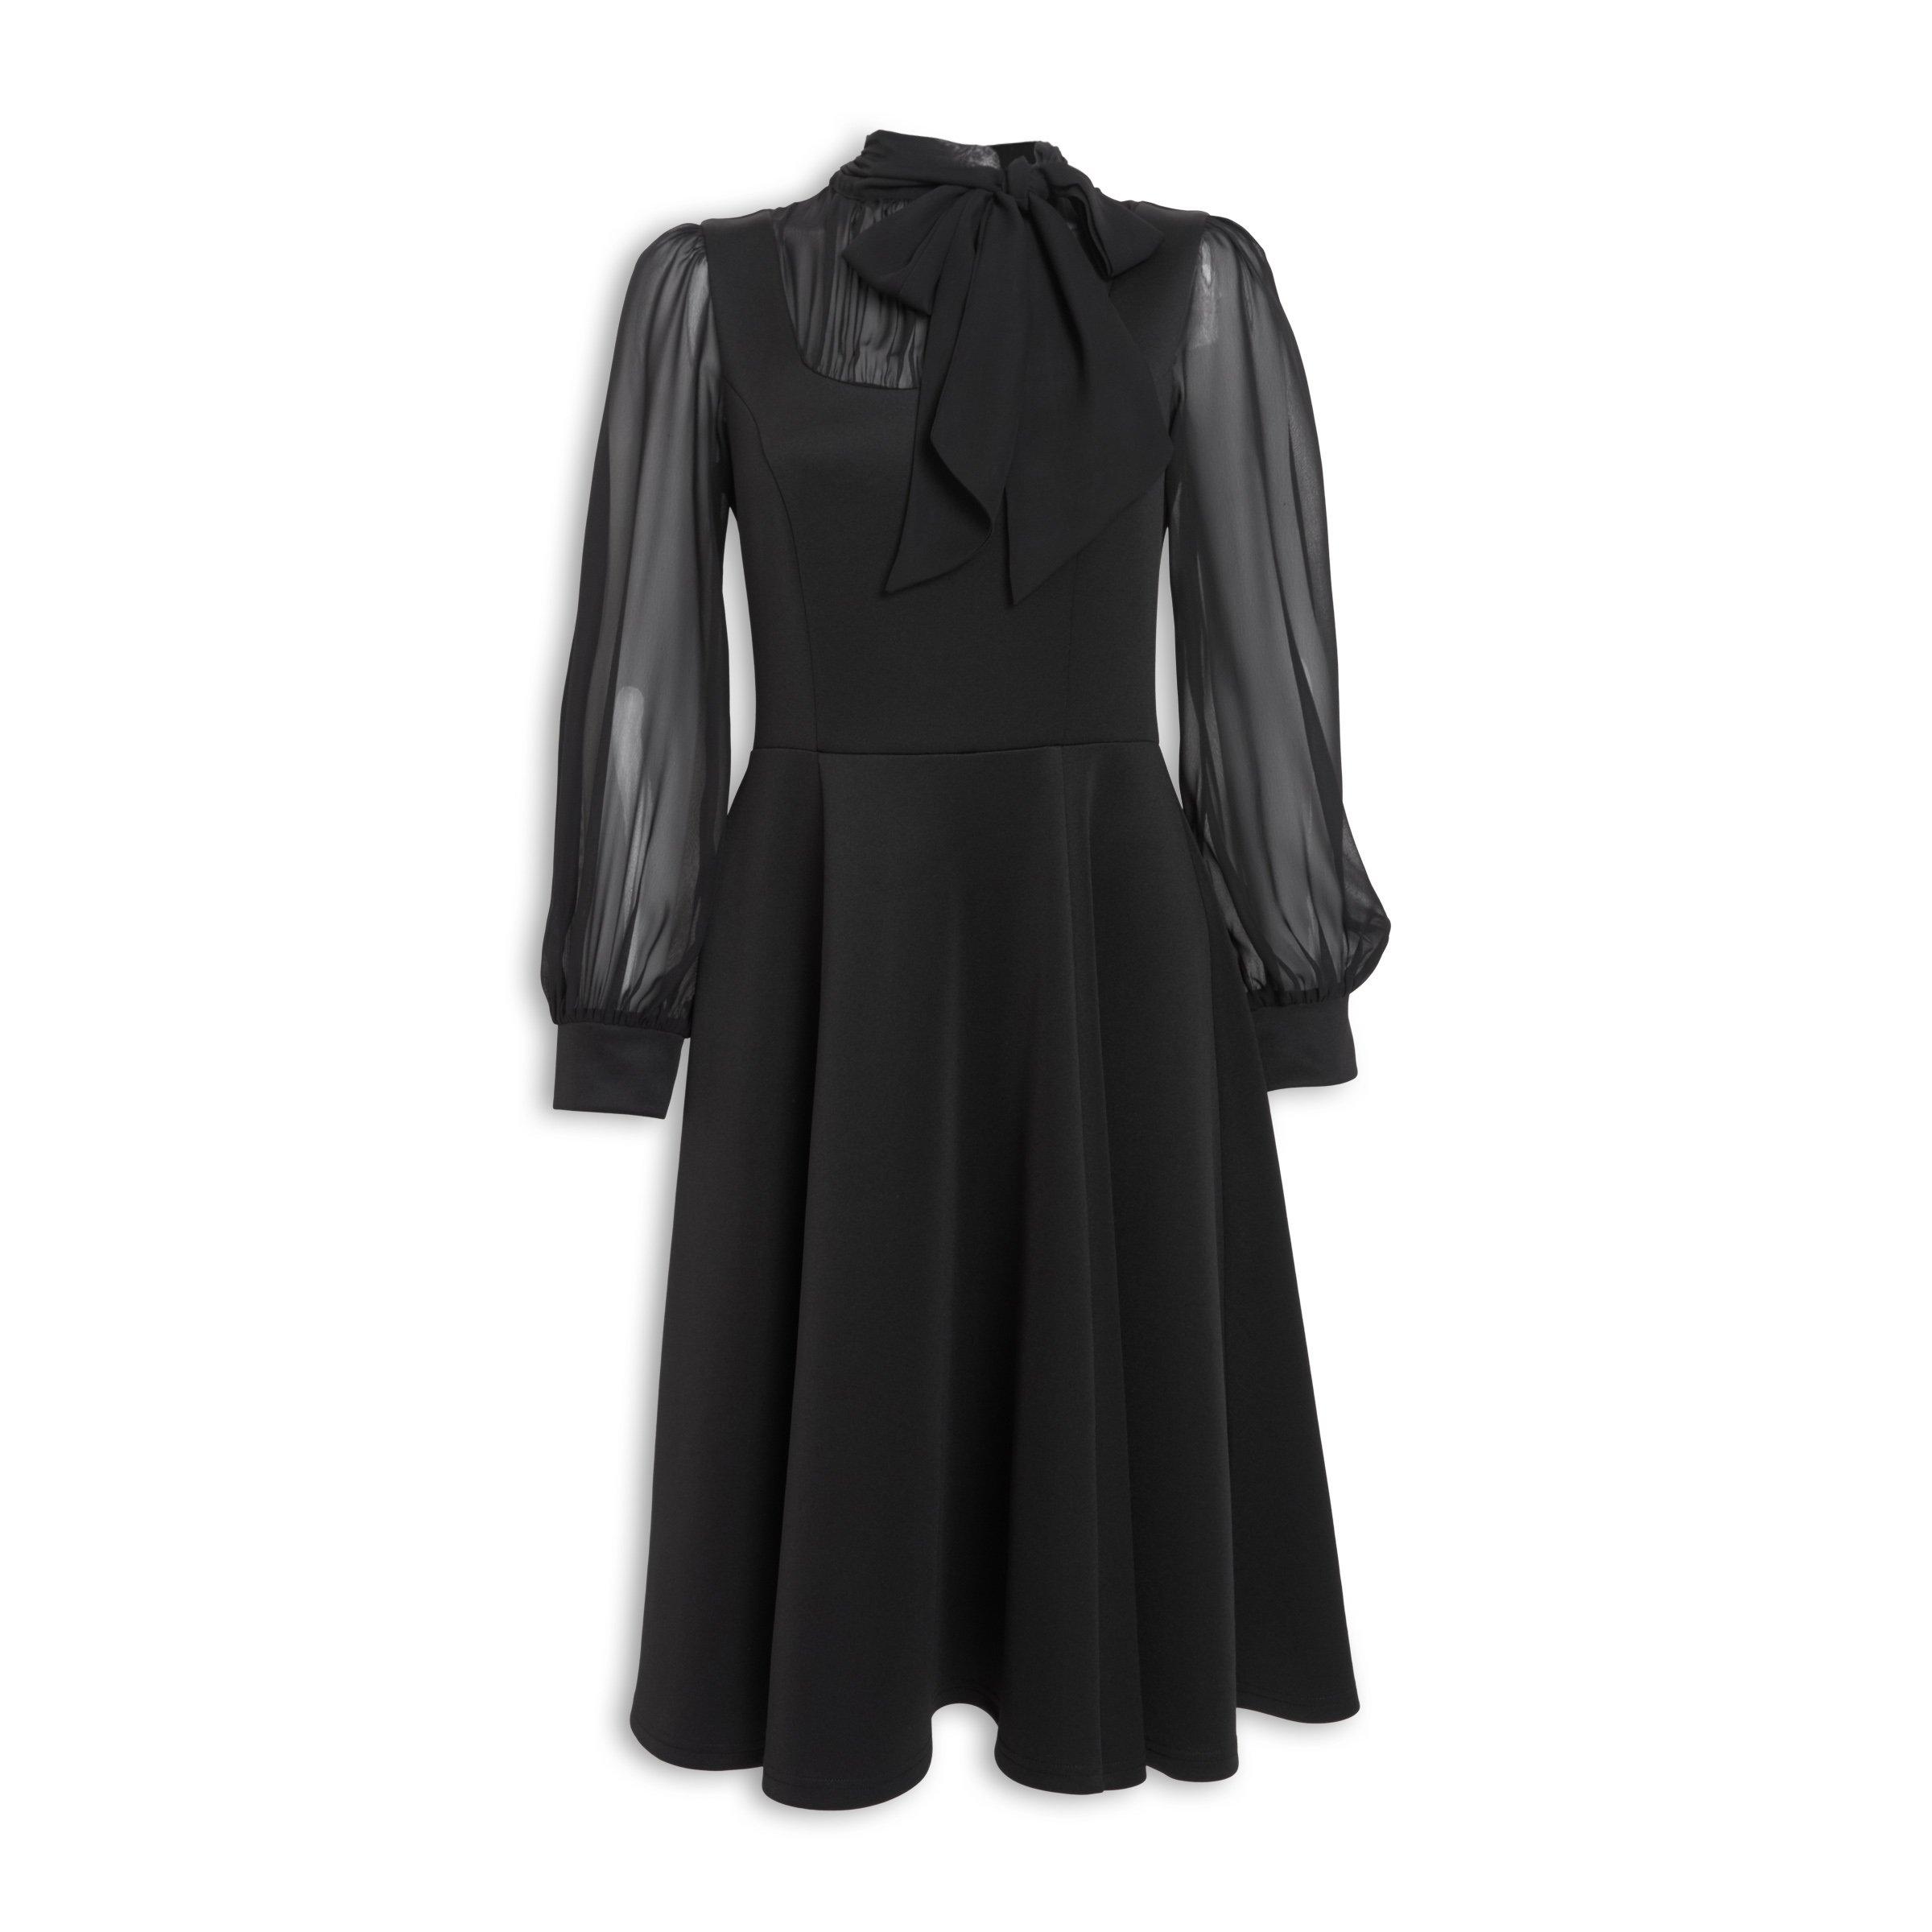 Buy Finnigans Black Flare Dress Online 